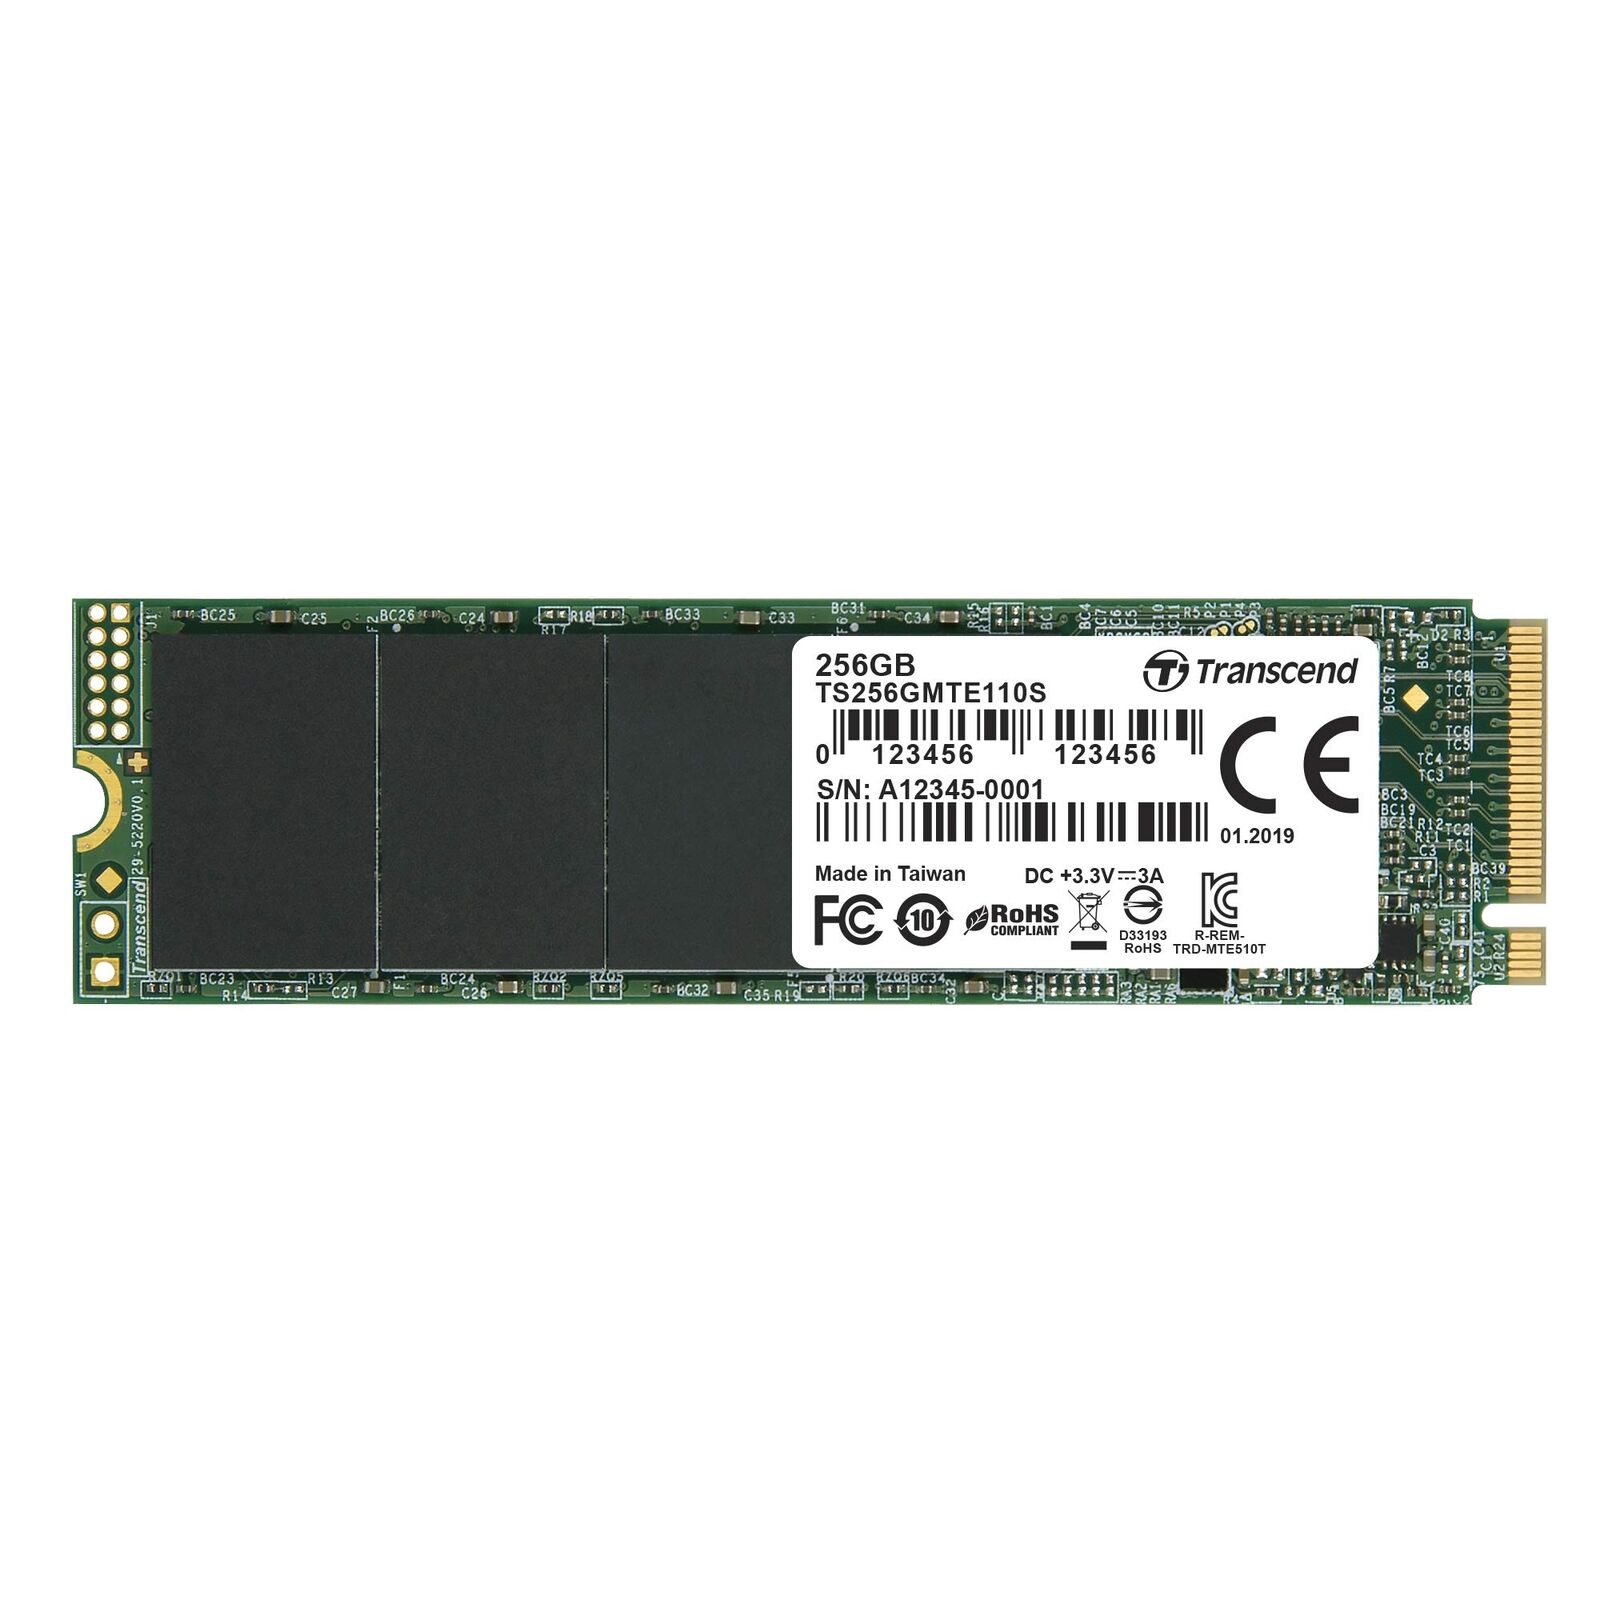 Transcend MTE110S 256 GB NVMe PCIe Gen3 x4 M.2 2280 Internal Solid State Drive (